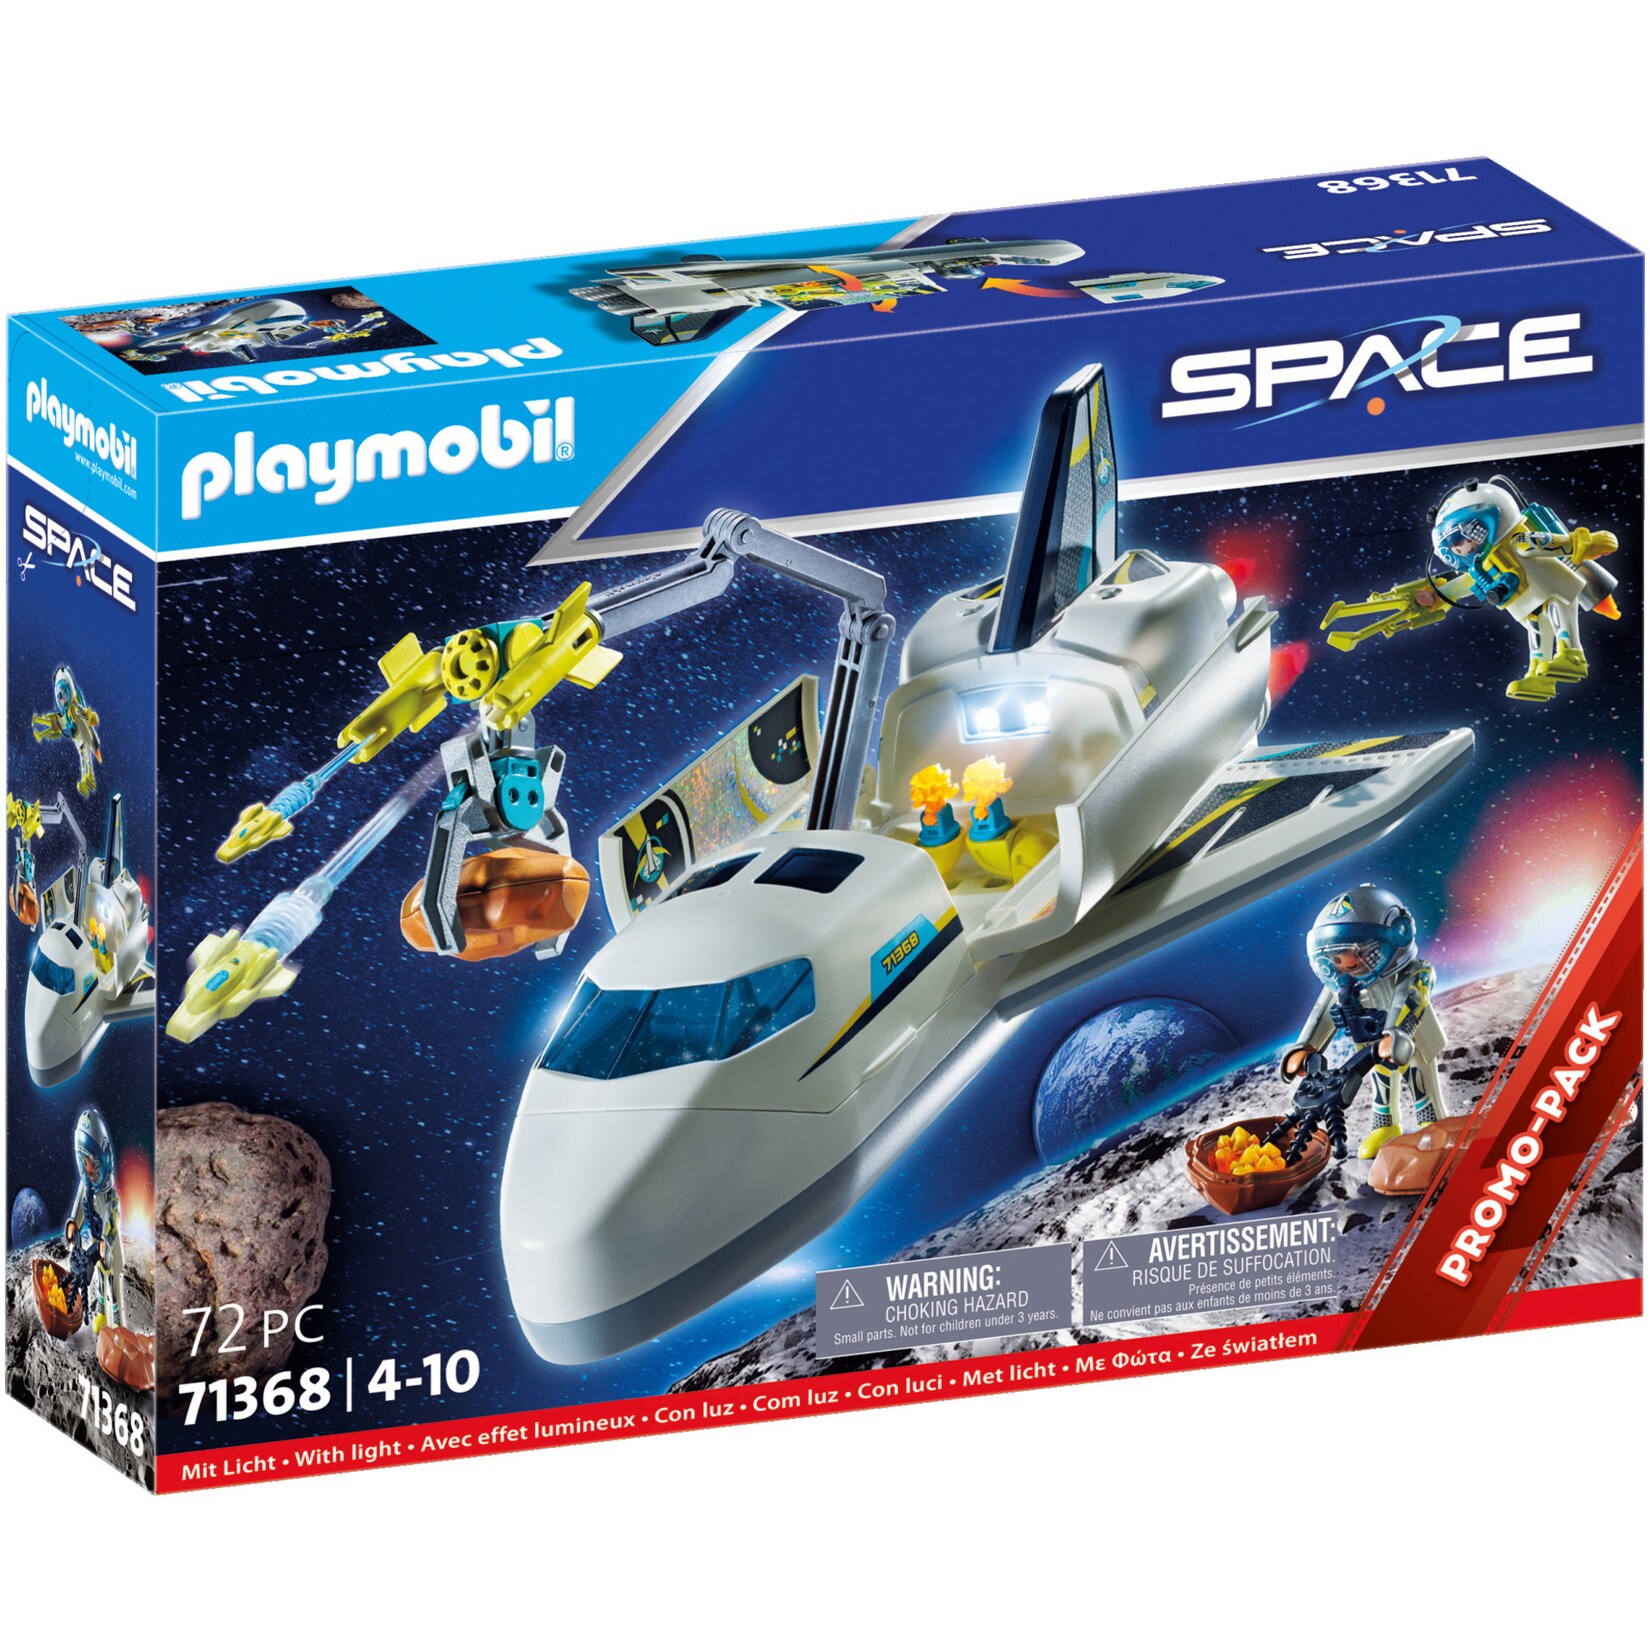 PLAYMOBIL Konstruktionsspielzeug Space-Shuttle auf Mission